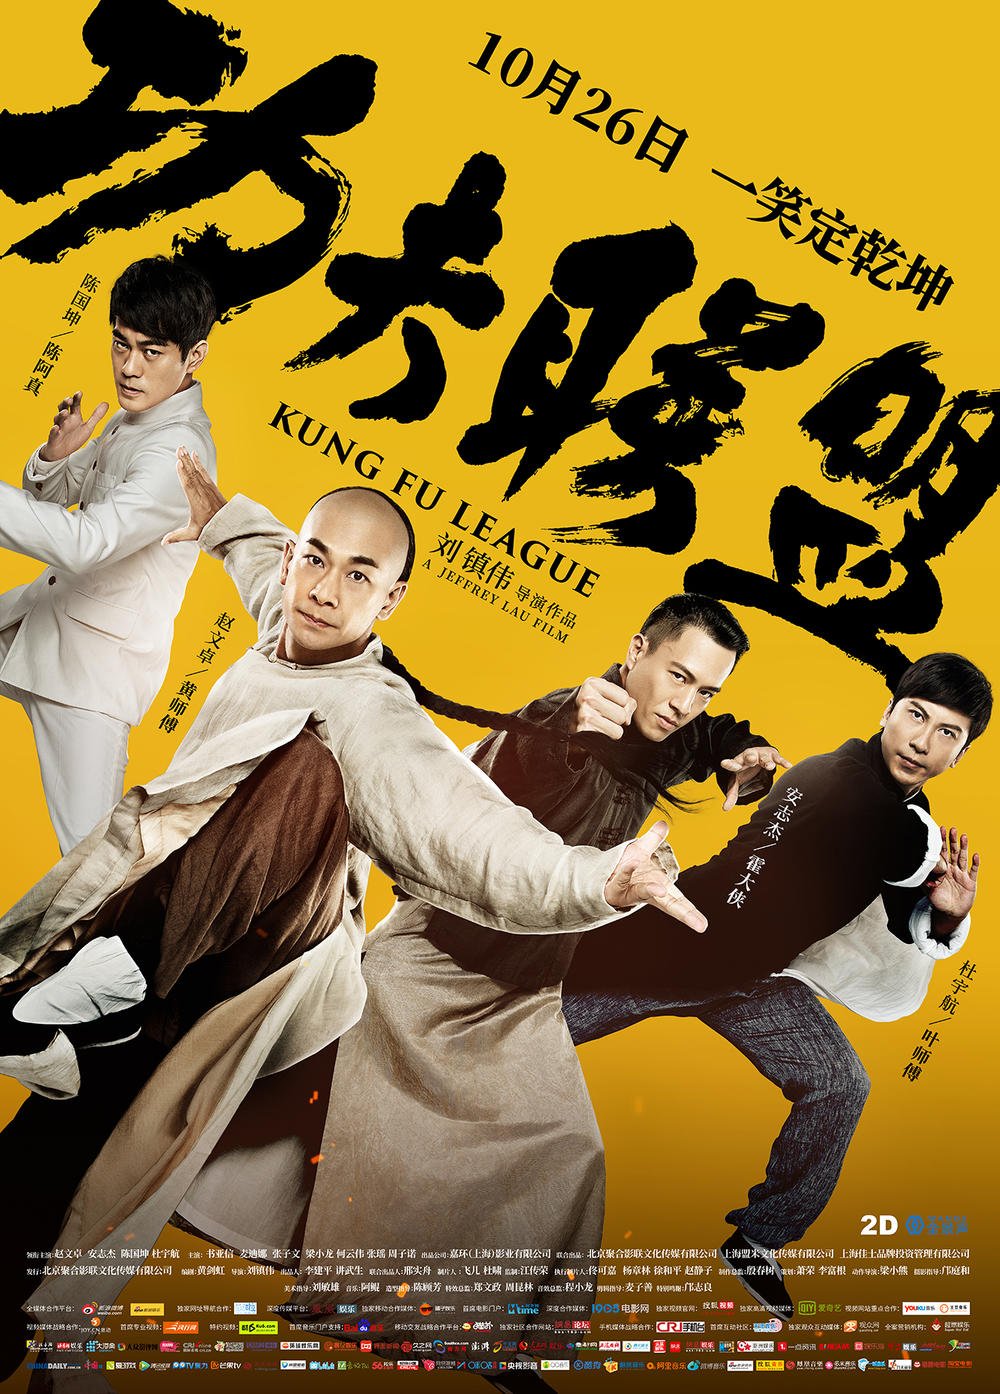 Nonton film Kung Fu League layarkaca21 indoxx1 ganool online streaming terbaru